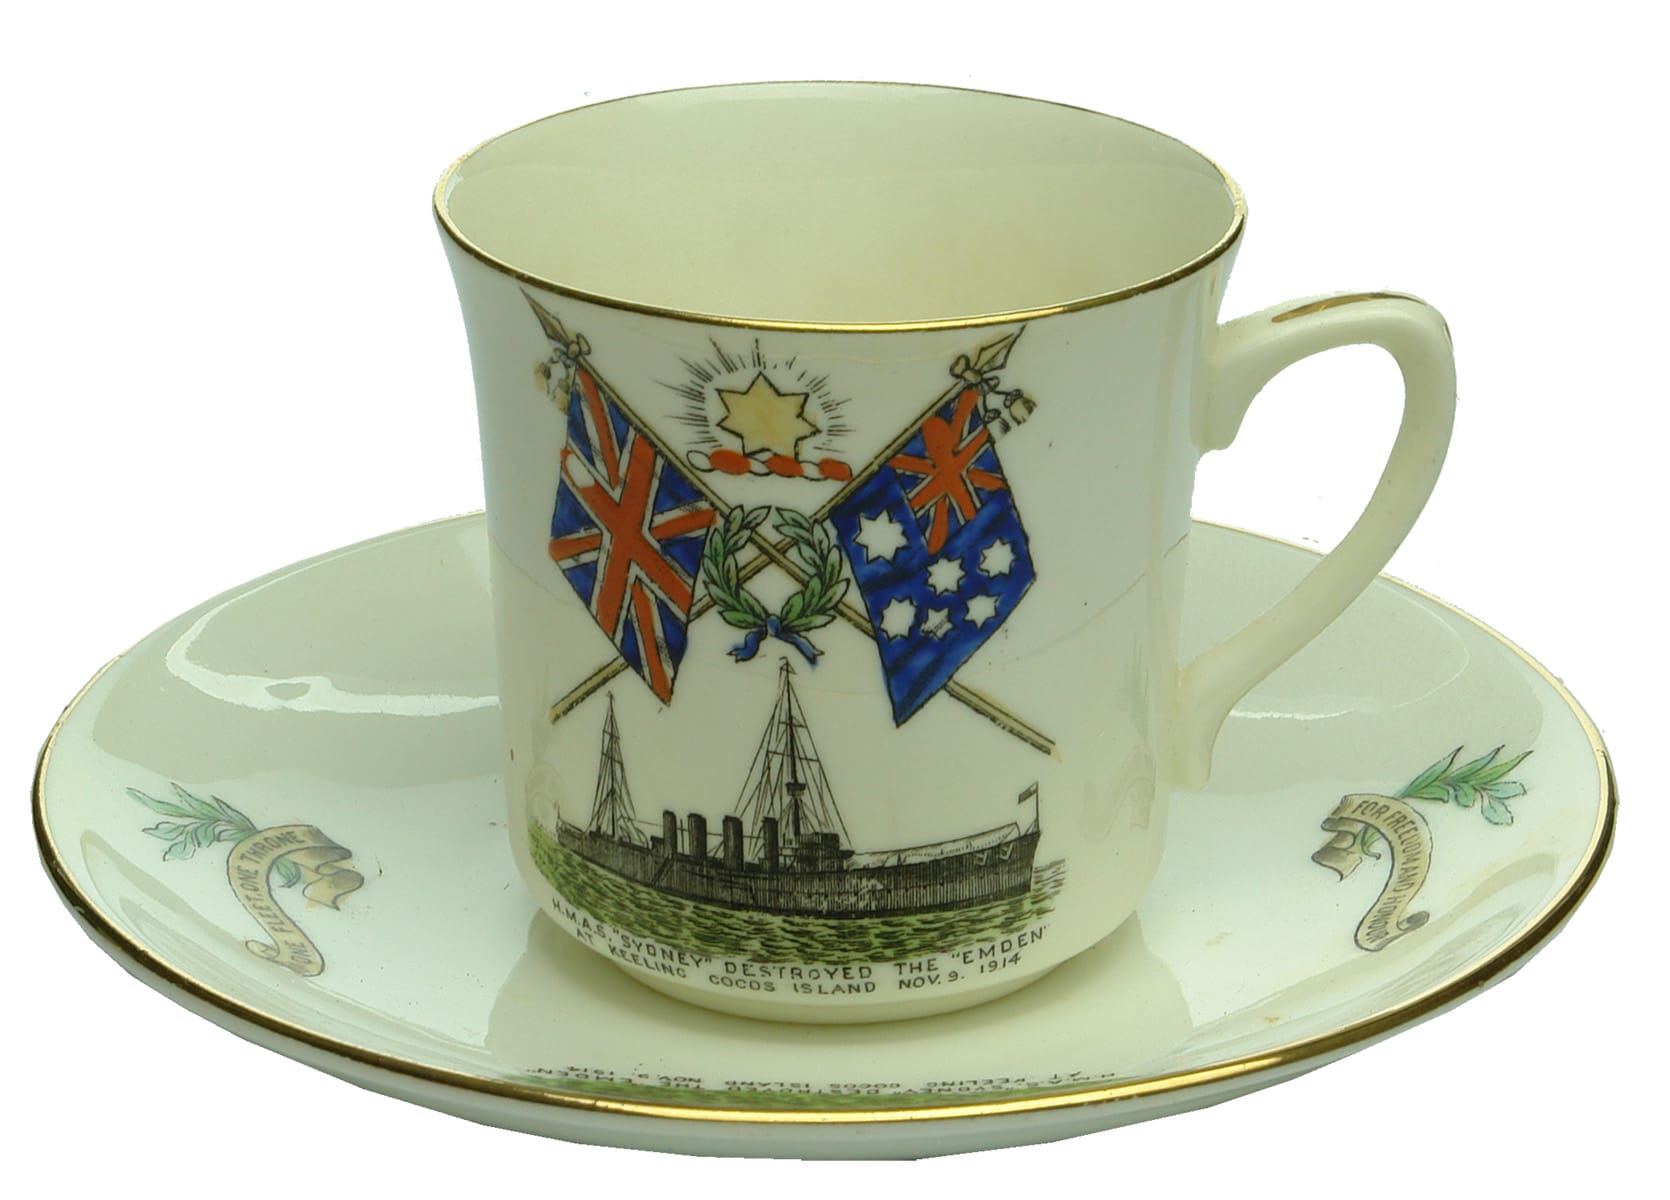 HMAS Sydney Emden Commemorative Cup Saucer